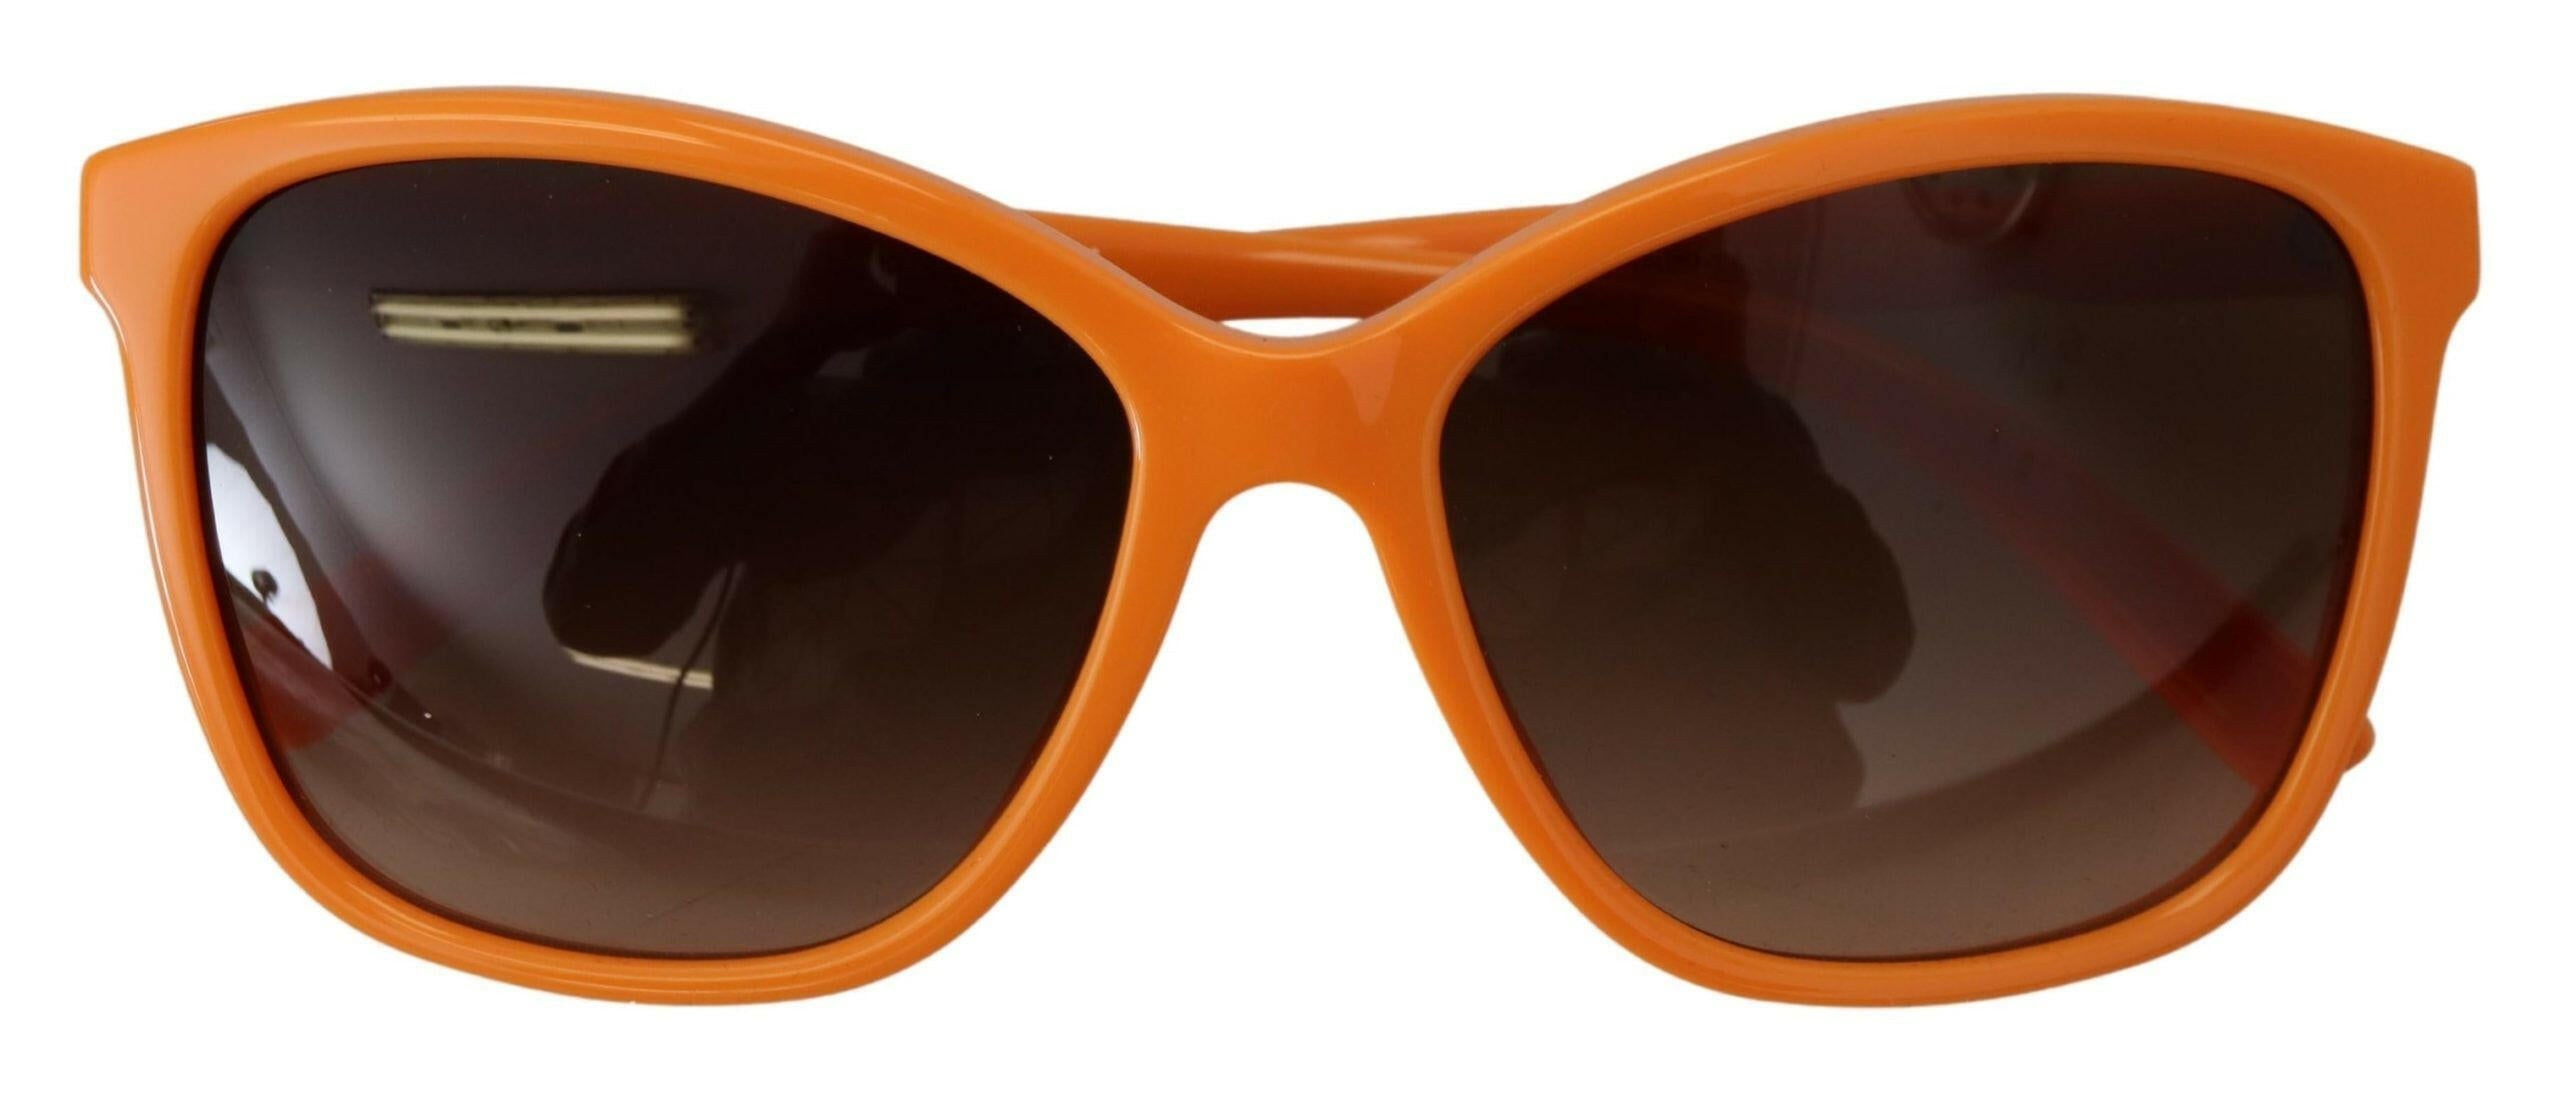 Dolce & Gabbana Orange Acetate Frame Round Shades DG4170PM Sunglasses - GENUINE AUTHENTIC BRAND LLC  